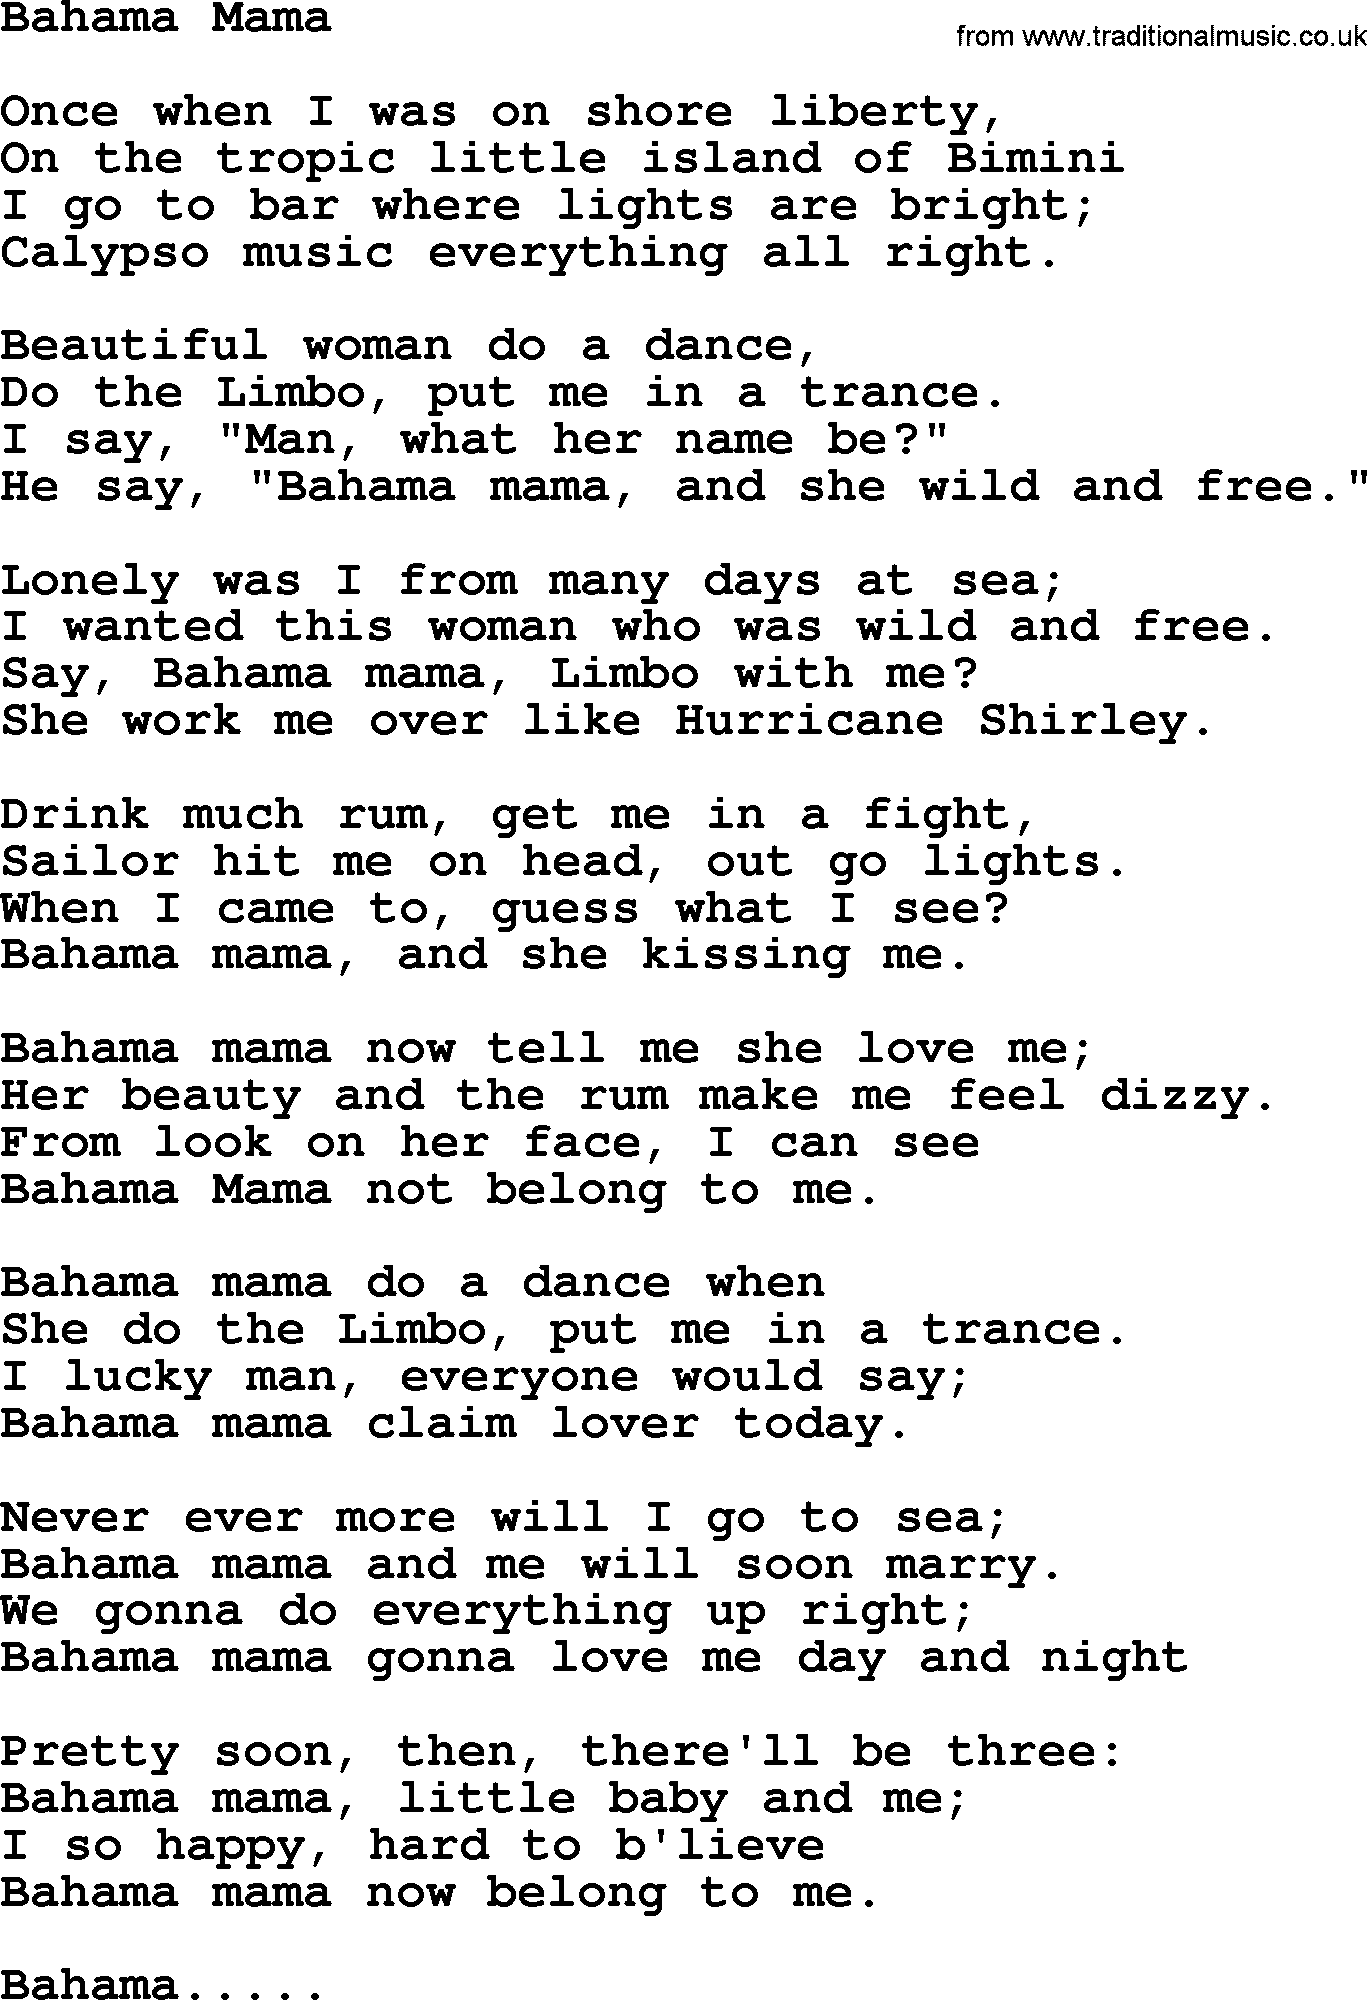 Marty Robbins song: Bahama Mama-, lyrics